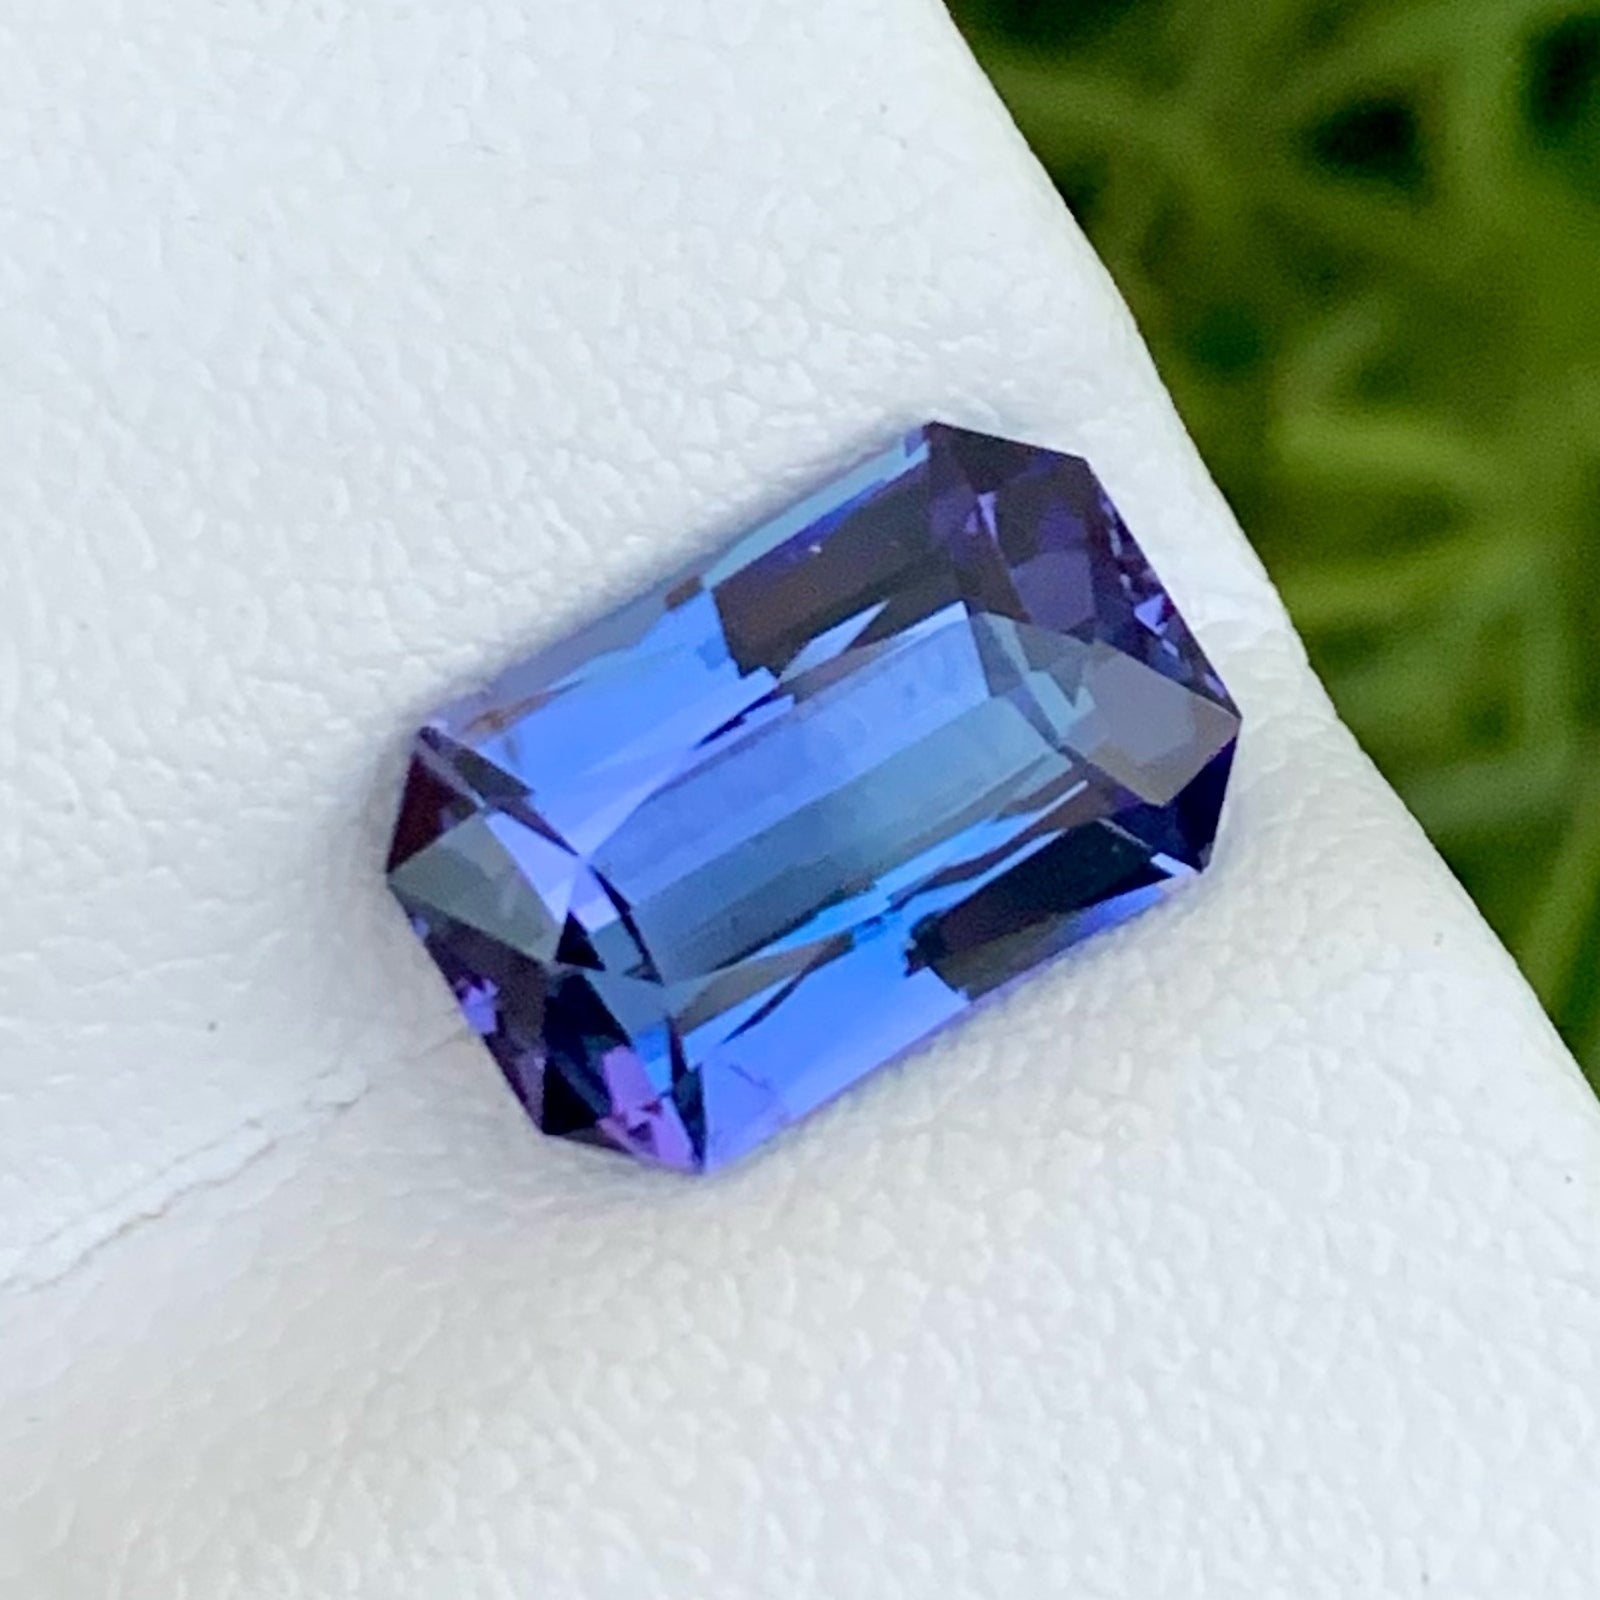 Stunning Natural Blue Tanzanite Gemstone